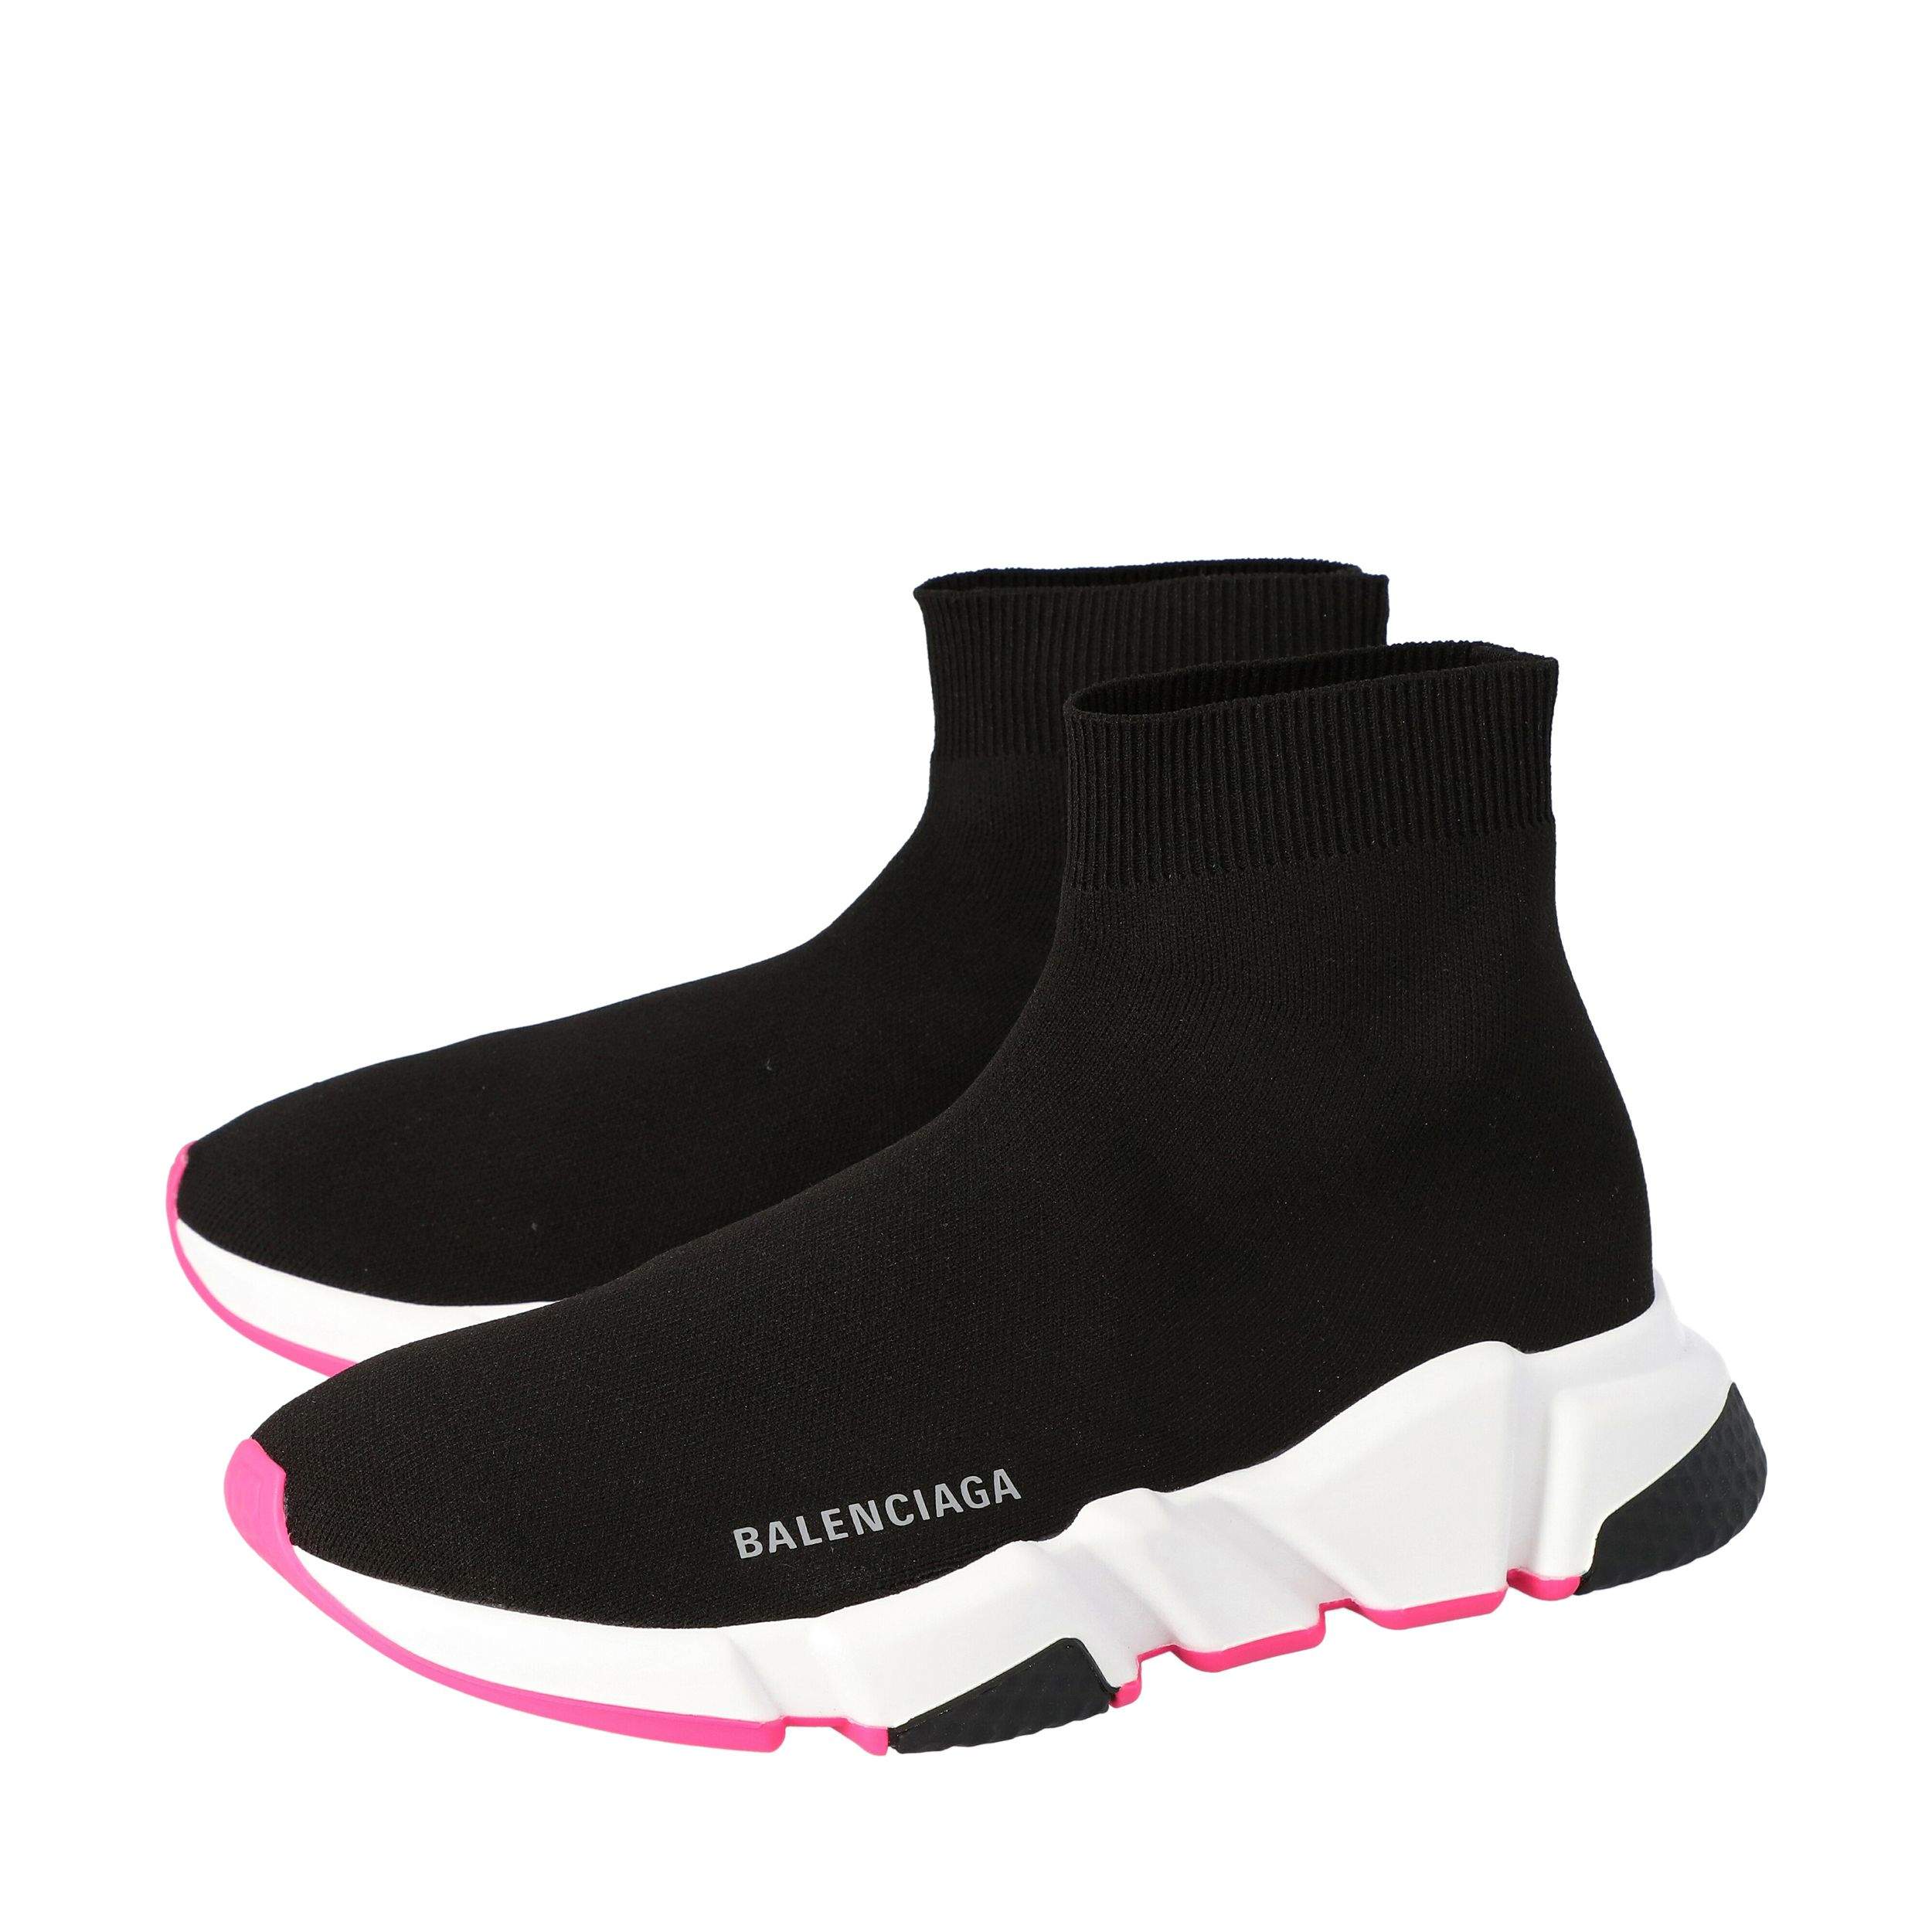 Balenciaga hightop sneakers men speed 20 617239W2DBO9910 logo detail shoes   eBay